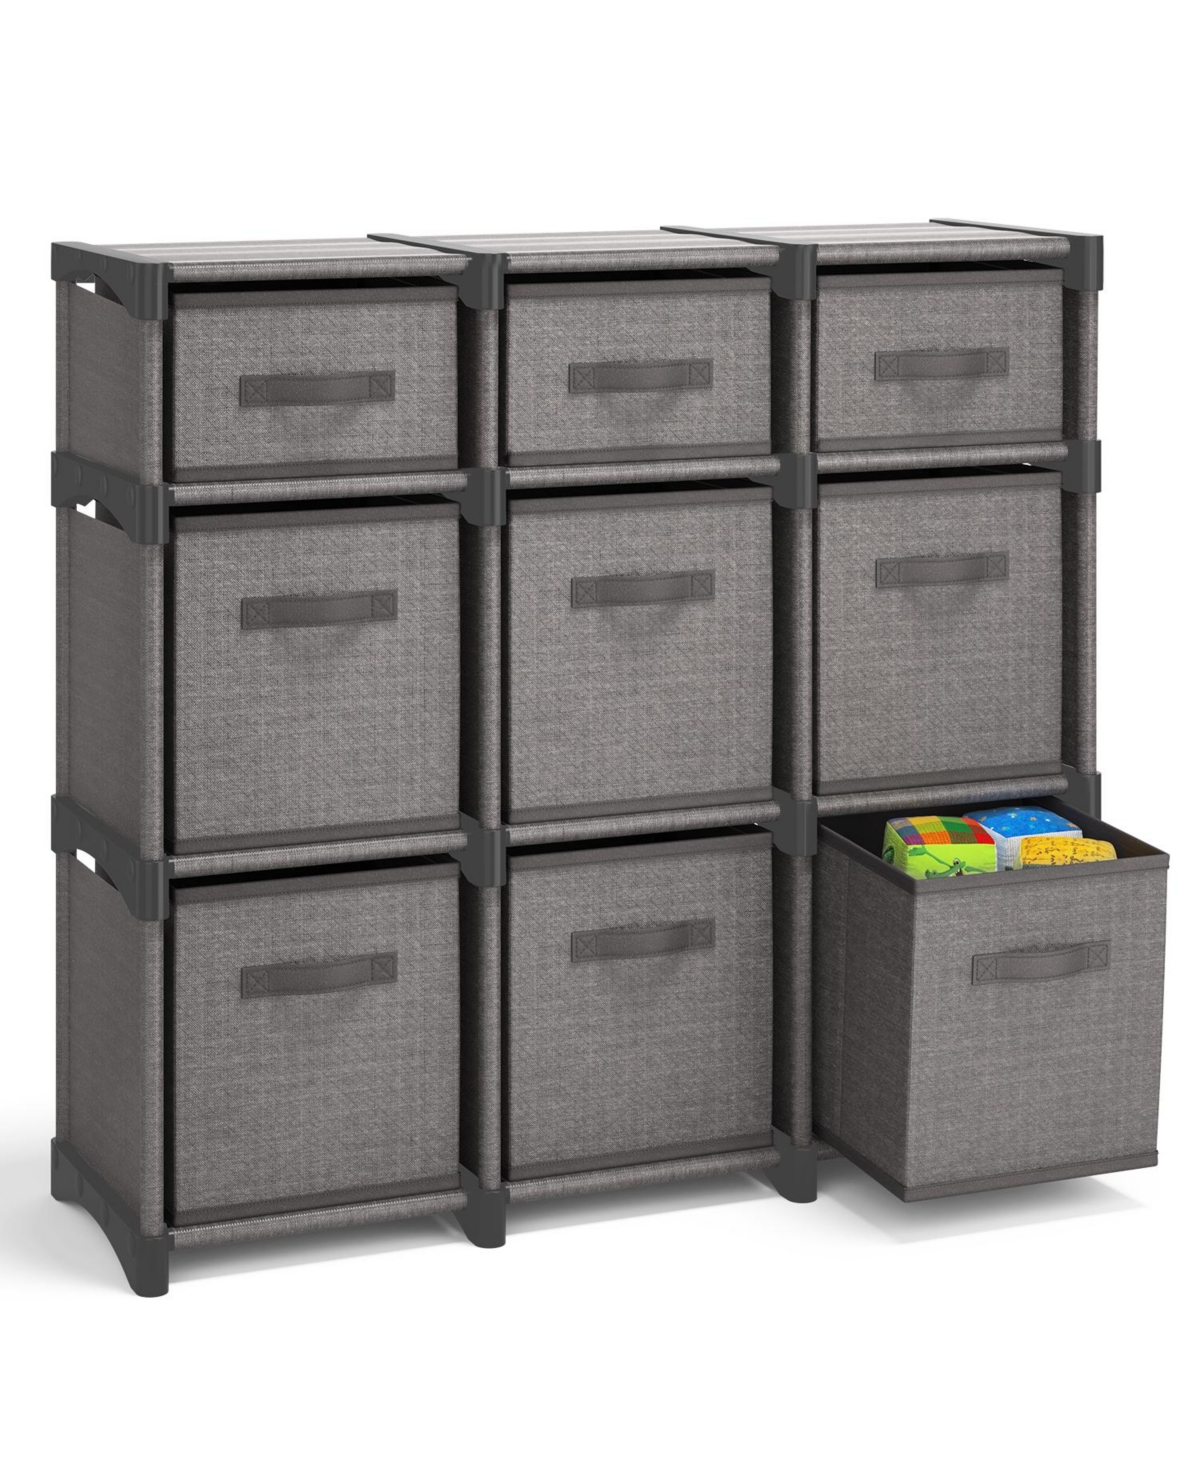 Heavy Duty 9 Cube Storage Organizer with Fabric Storage Bins - Black